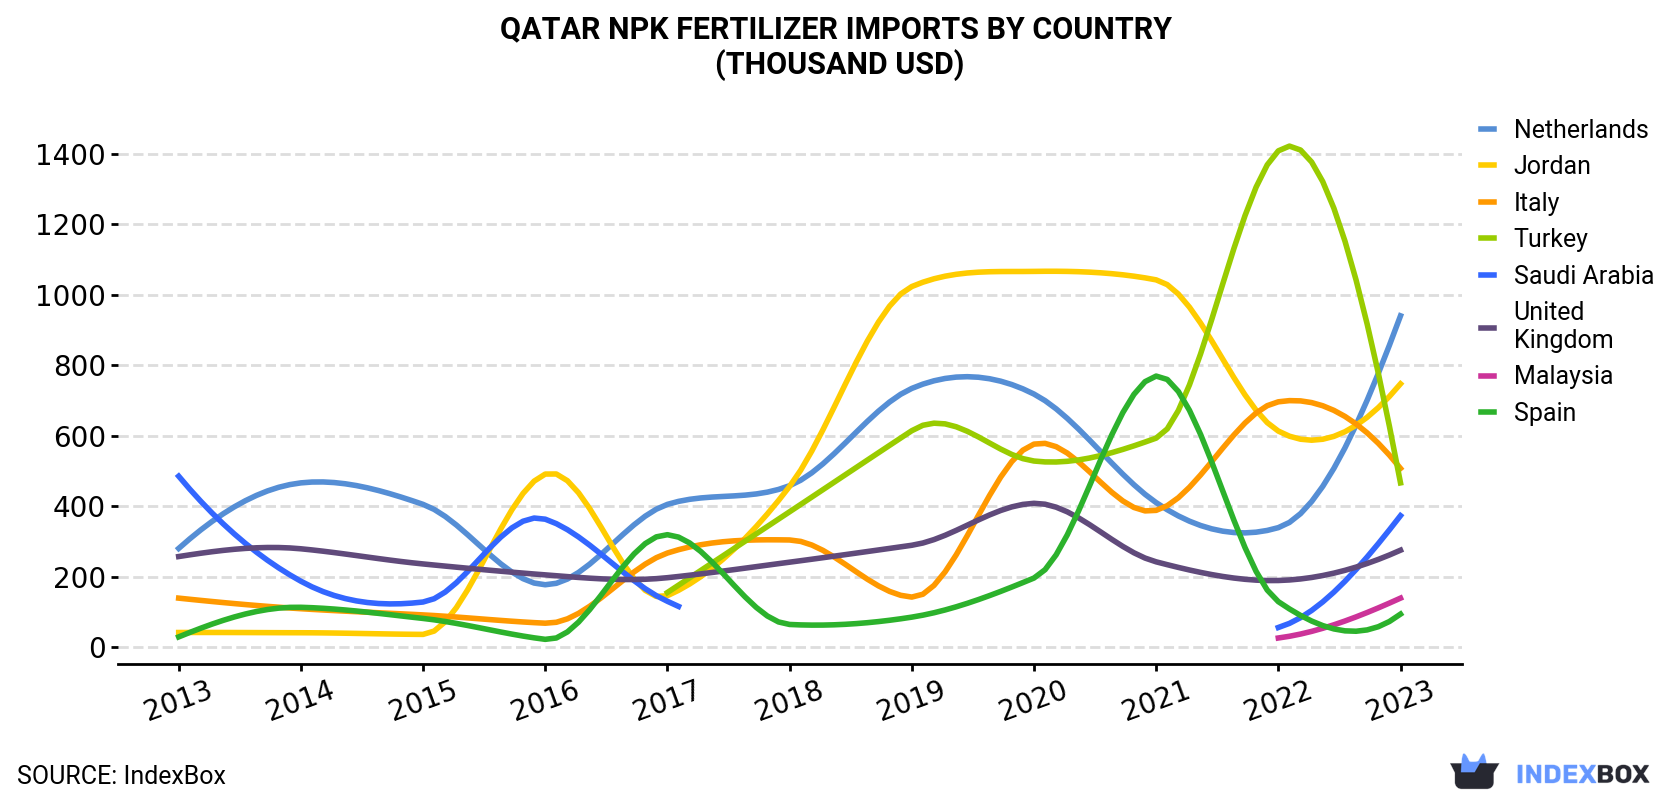 Qatar NPK Fertilizer Imports By Country (Thousand USD)